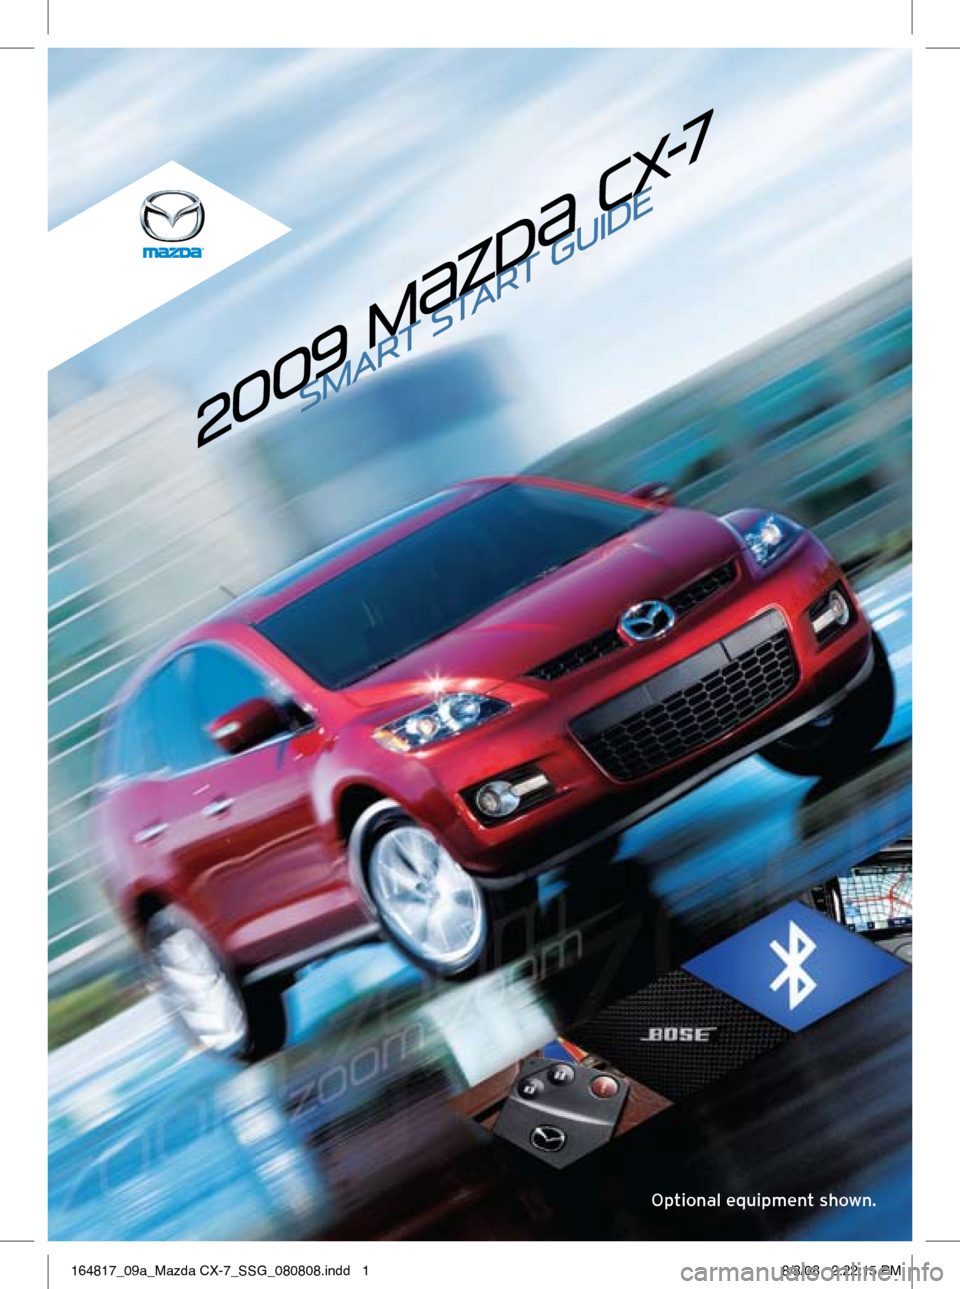 MAZDA MODEL CX-7 2009  Smart Start Guide (in English) 2009 m{ZD{  CX-7
SMART START GUIDE
Optional equipment shown.
164817_09a_Mazda CX-7_SSG_080808.indd   18/8/08   2:22:15 PM 